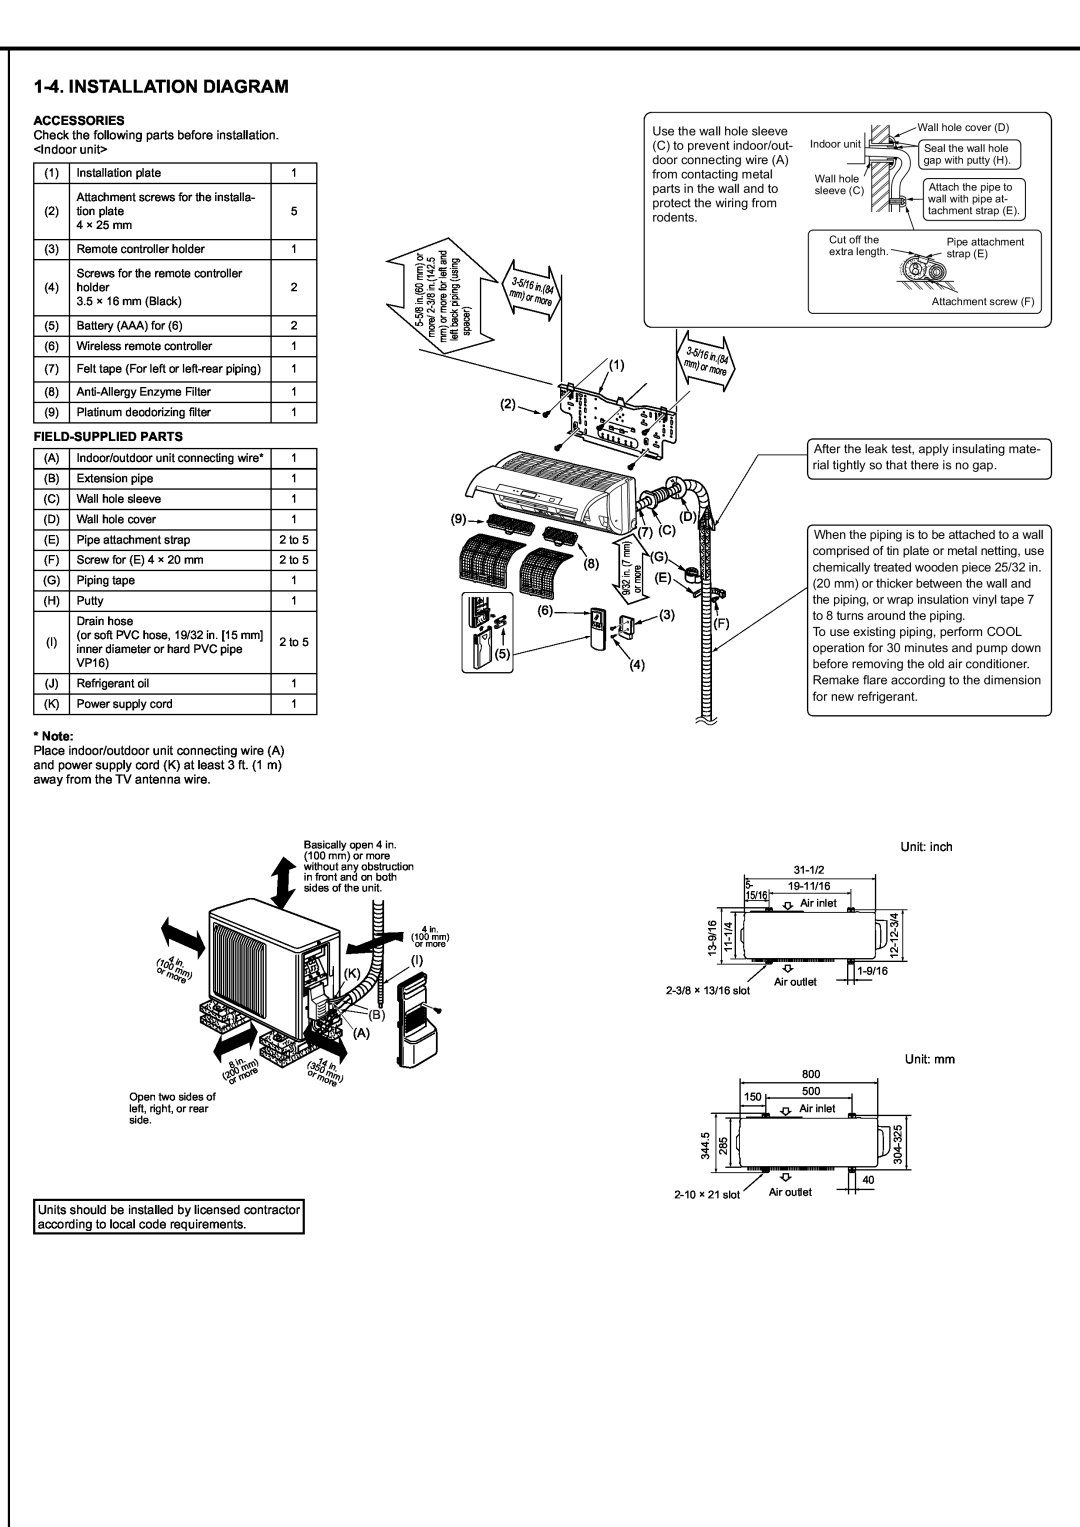 Mitsubishi Electronics MSZ-FD09/12NA installation manual Installation Diagram, Accessories, Field-Supplied Parts 